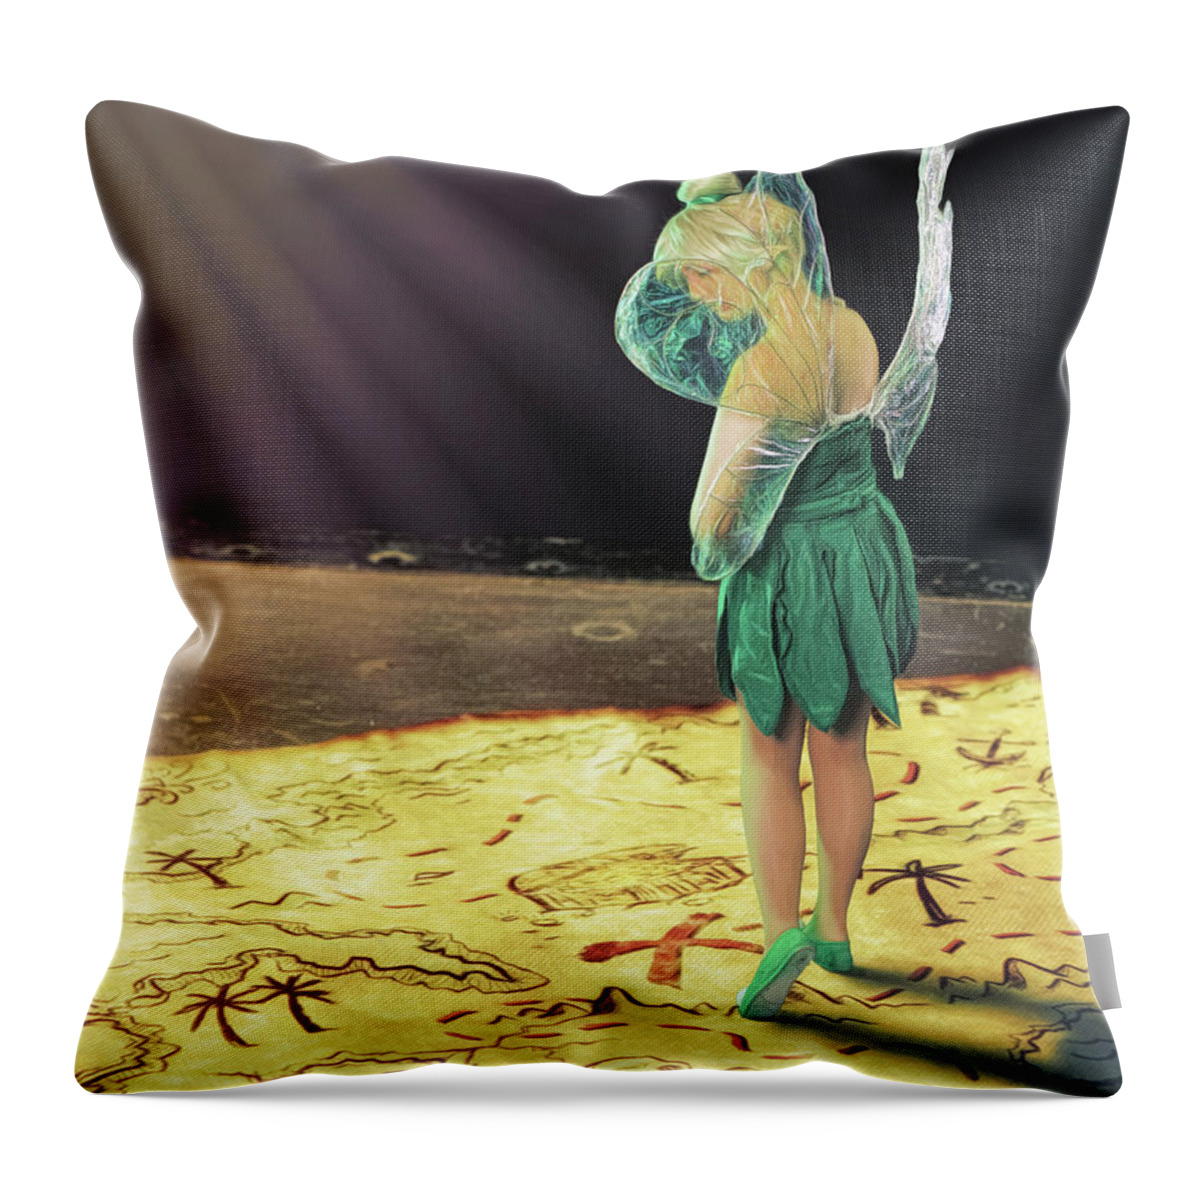 Fairy Throw Pillow featuring the digital art X Marks the Spot by Brad Barton